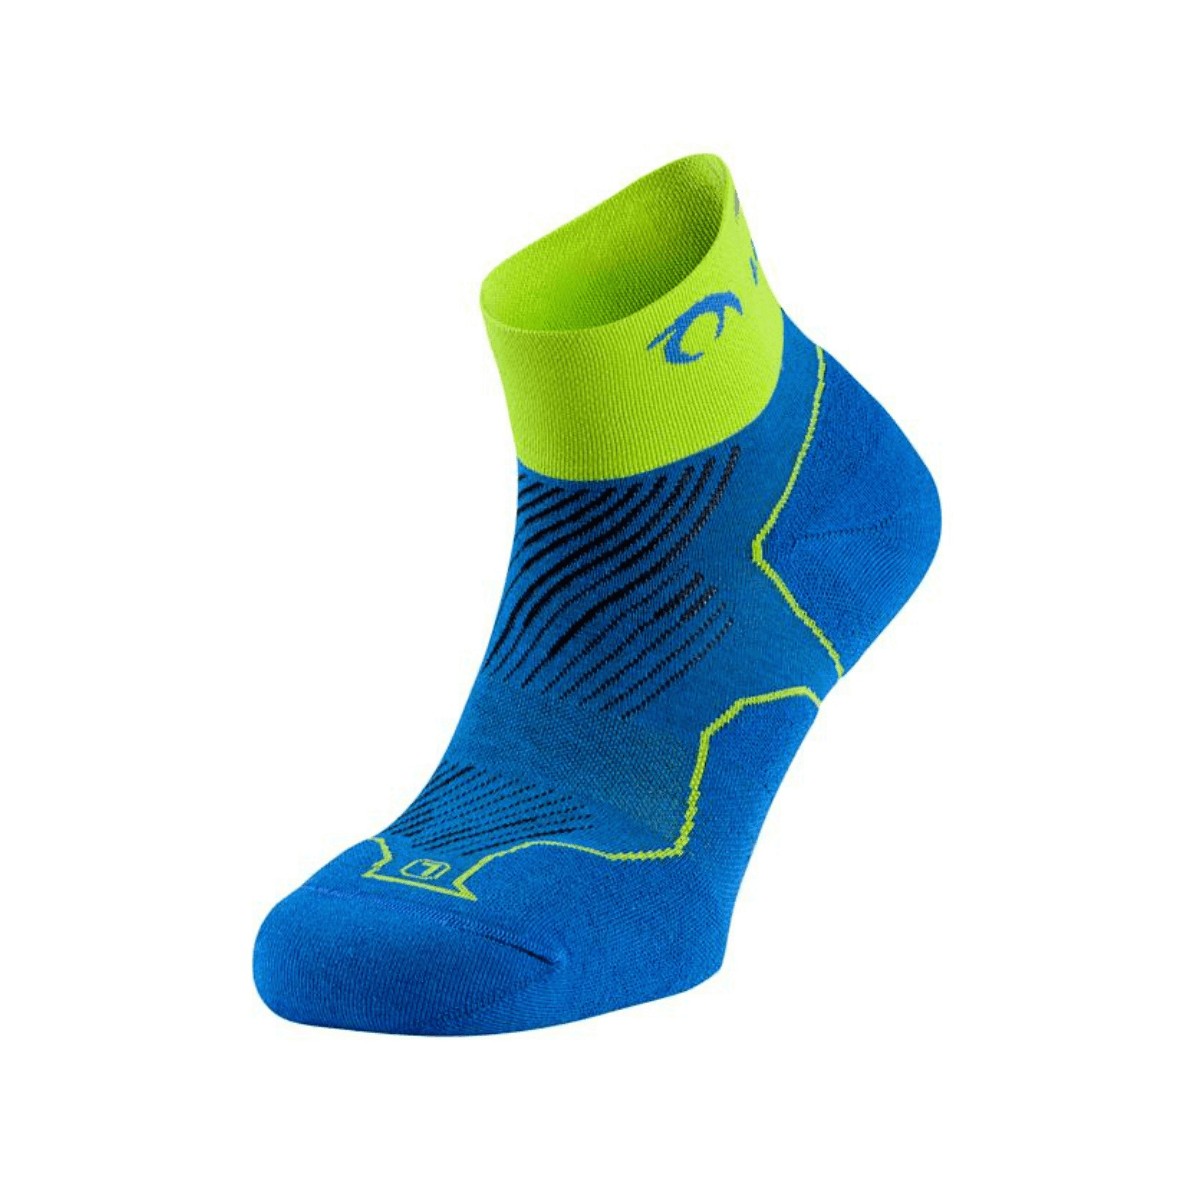 Running Socke günstig Kaufen-Lurbel Distance Socken Blau Grün, Größe S. Lurbel Distance Socken Blau Grün, Größe S <![CDATA[Eigenschaften Running Lurbel Distanzsocken Die Lurbel Distance sind technische Socken aus 50 % Regenactiv, 25 % Cool-Tech, 17 % Pol